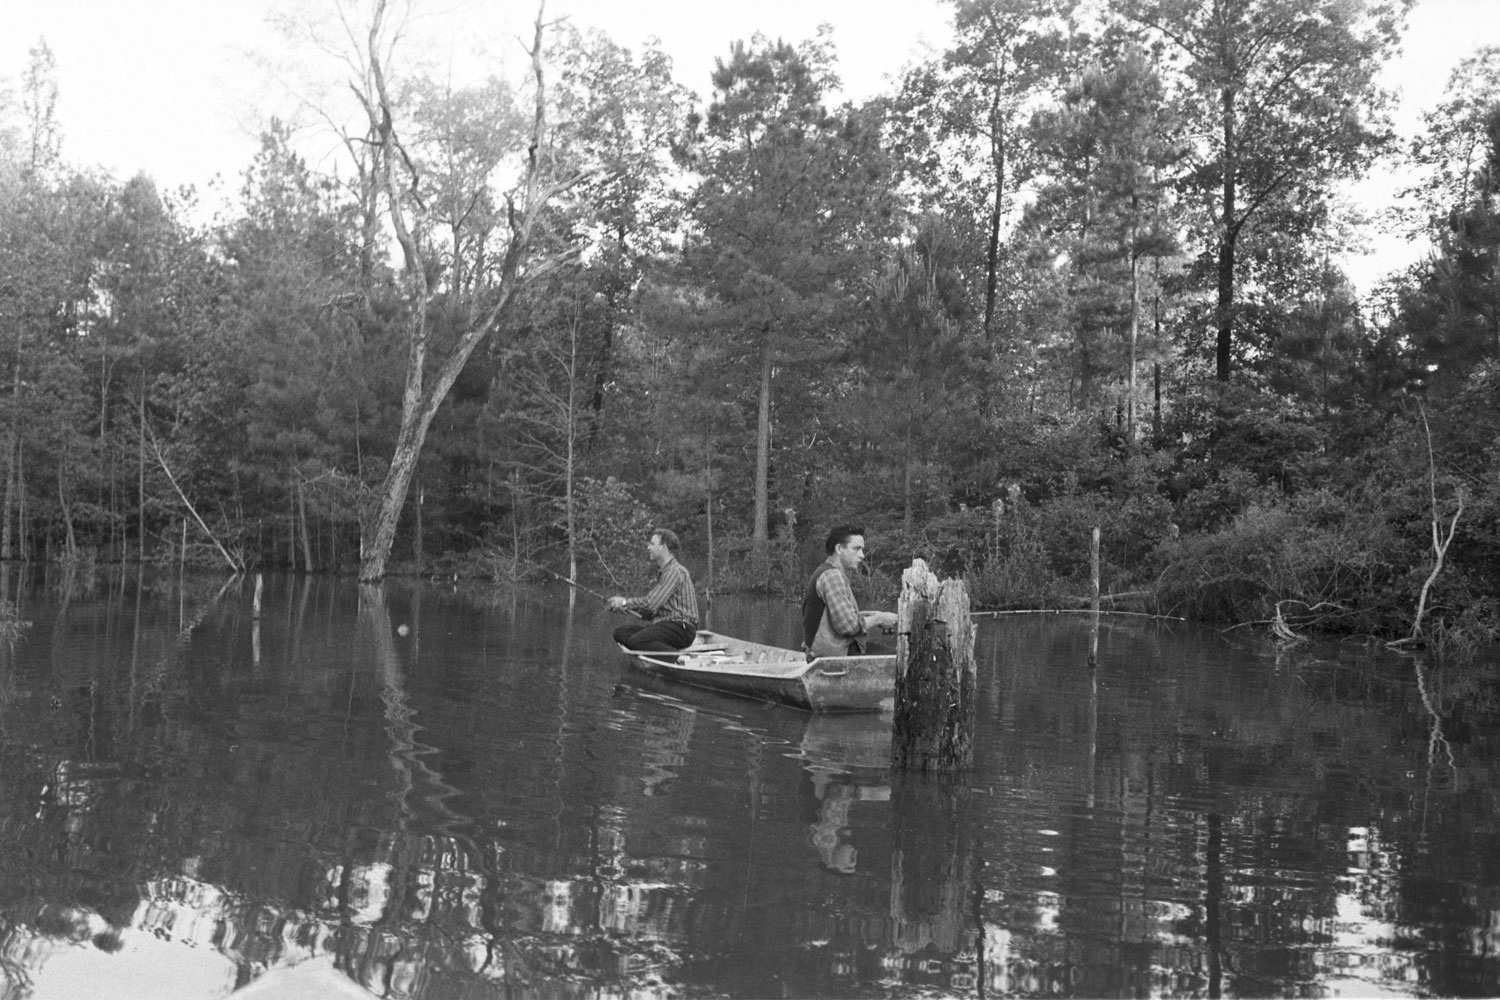 Fishing on his farm in San Antonio, May 1959.